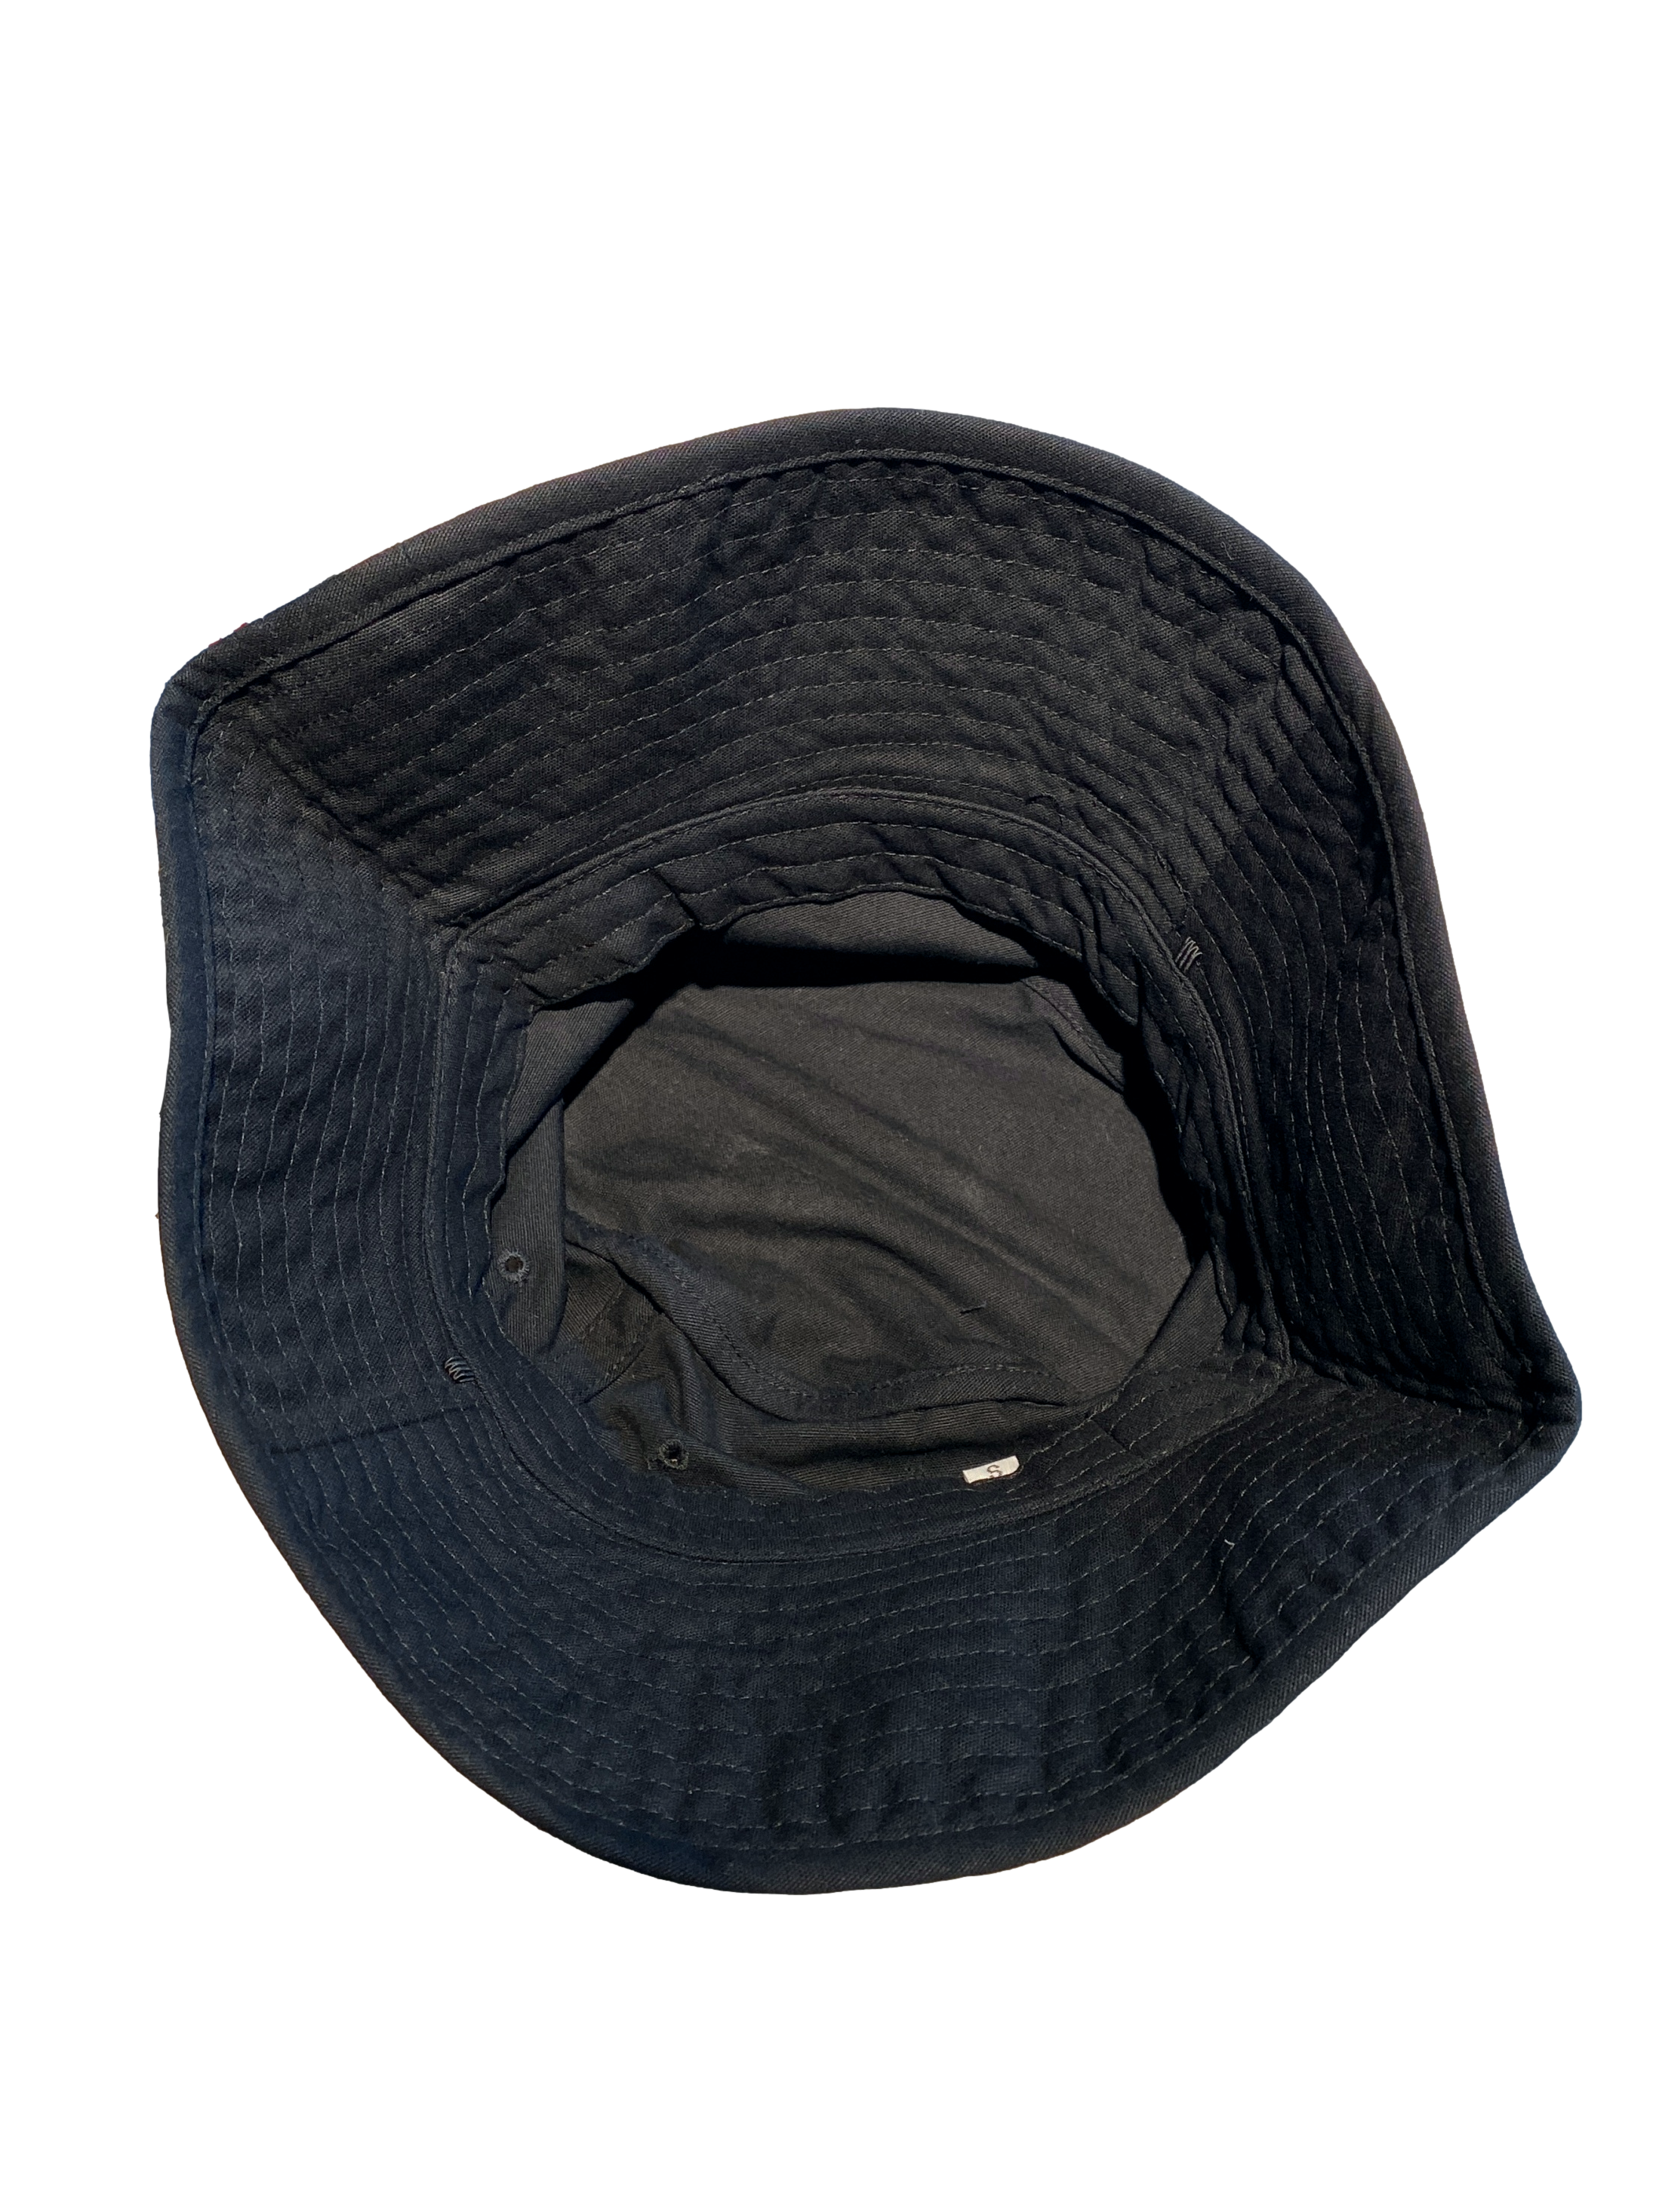 Onyx Black Bucket Hat